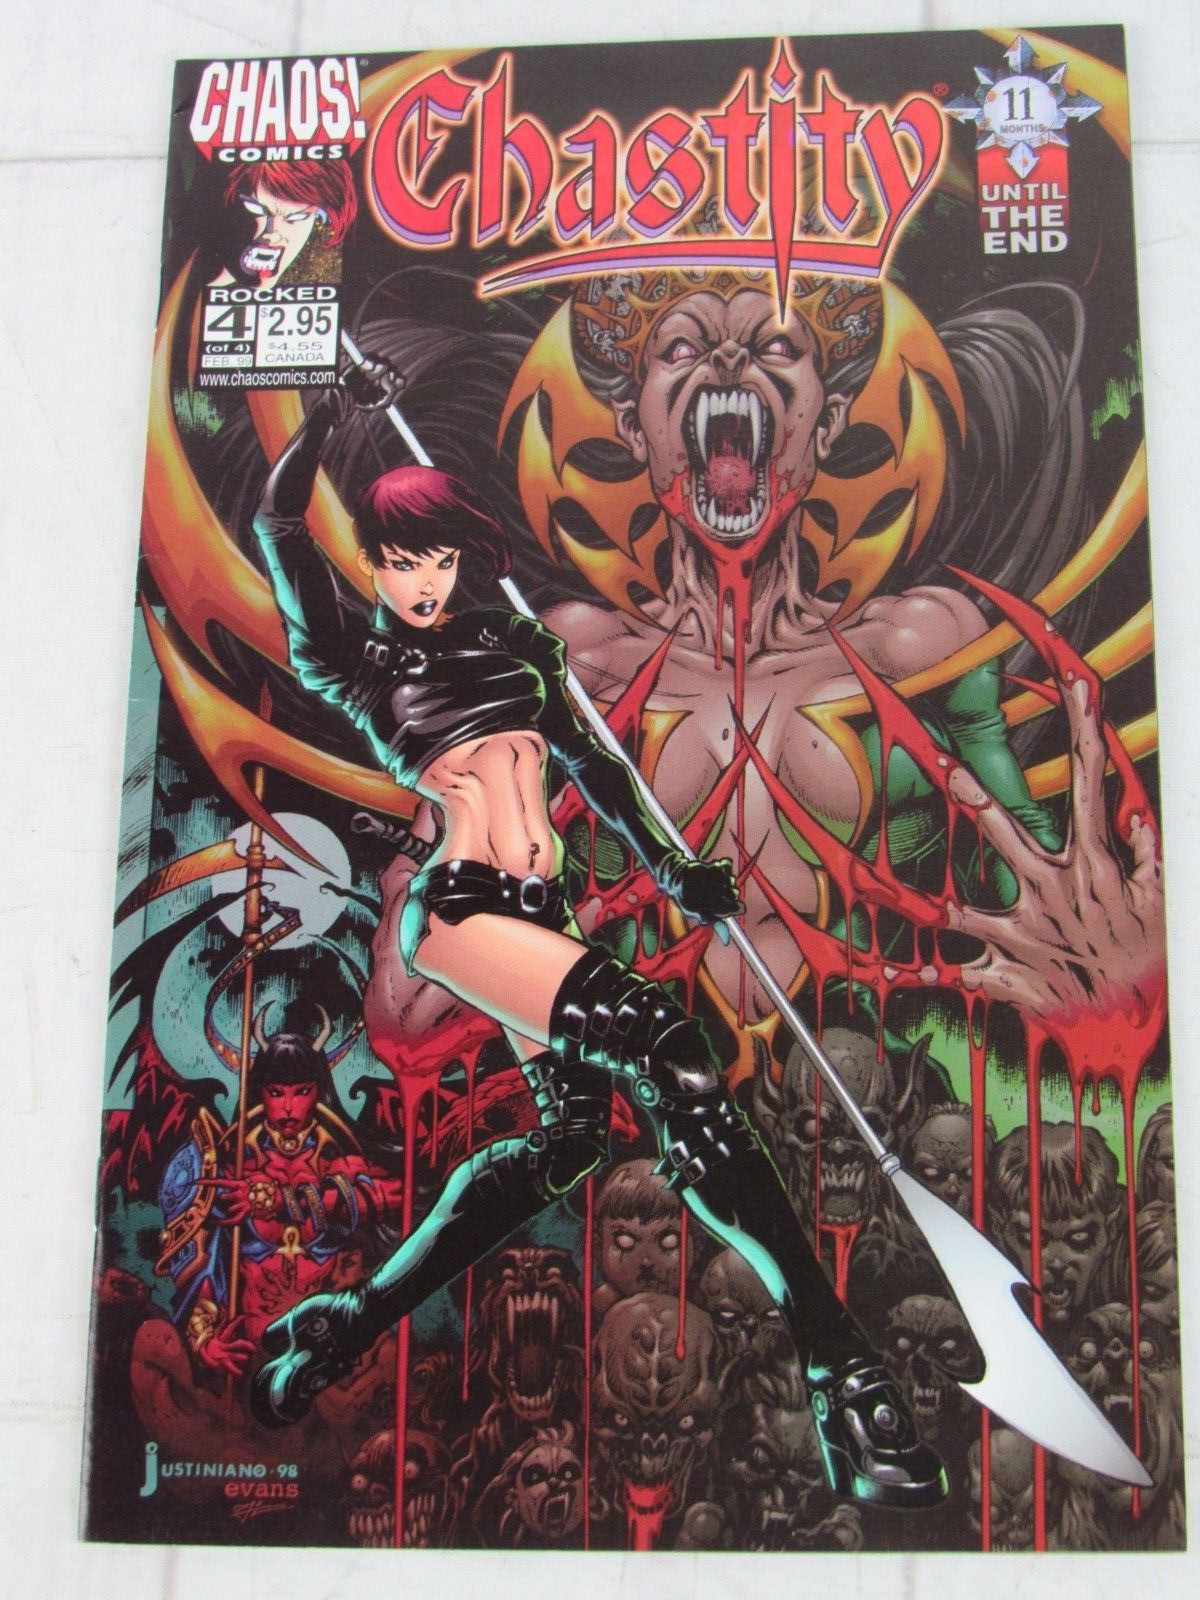 Chastity: Rocked #4 Feb. 1999 Chaos Comics